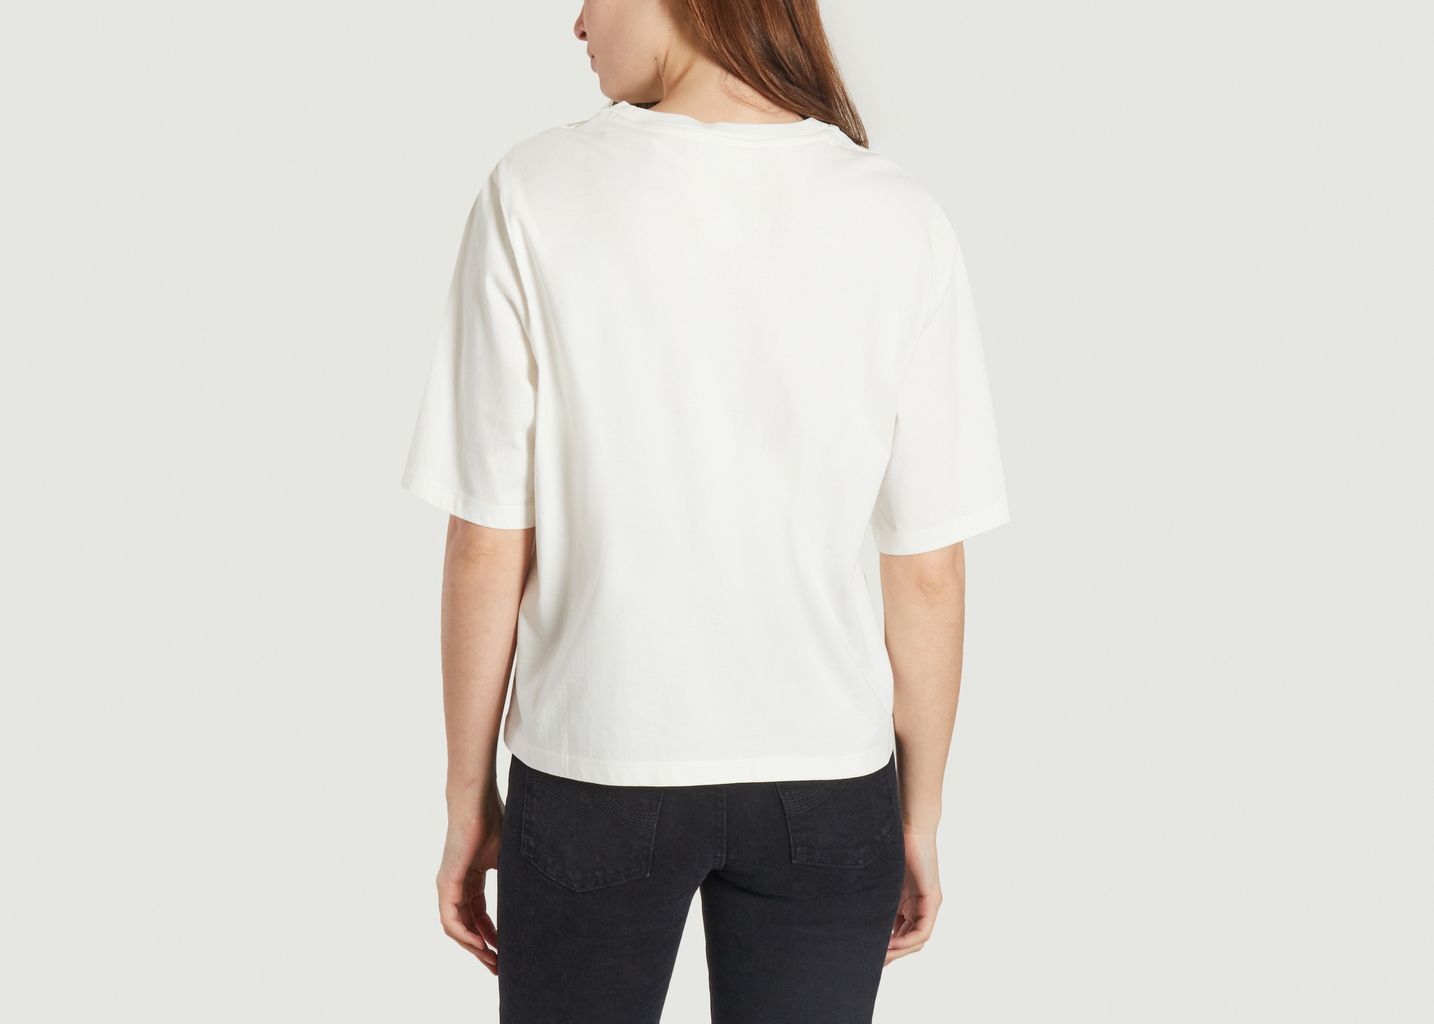 T-shirt blanc imprimé multicolore - Thinking Mu 